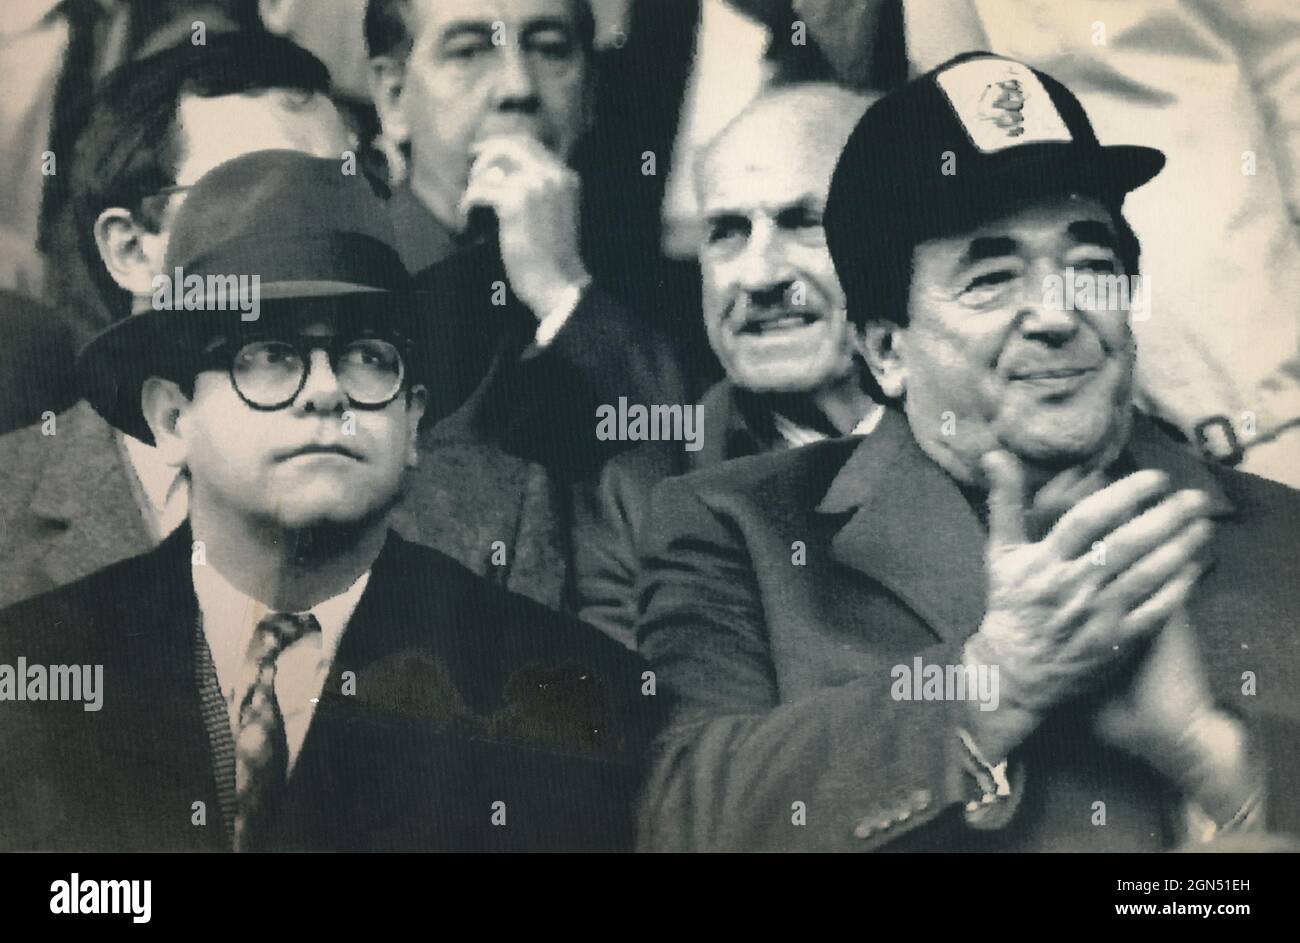 English singer Elton John and media tycoon Robert Maxwell at the stadium, 1989 Stock Photo